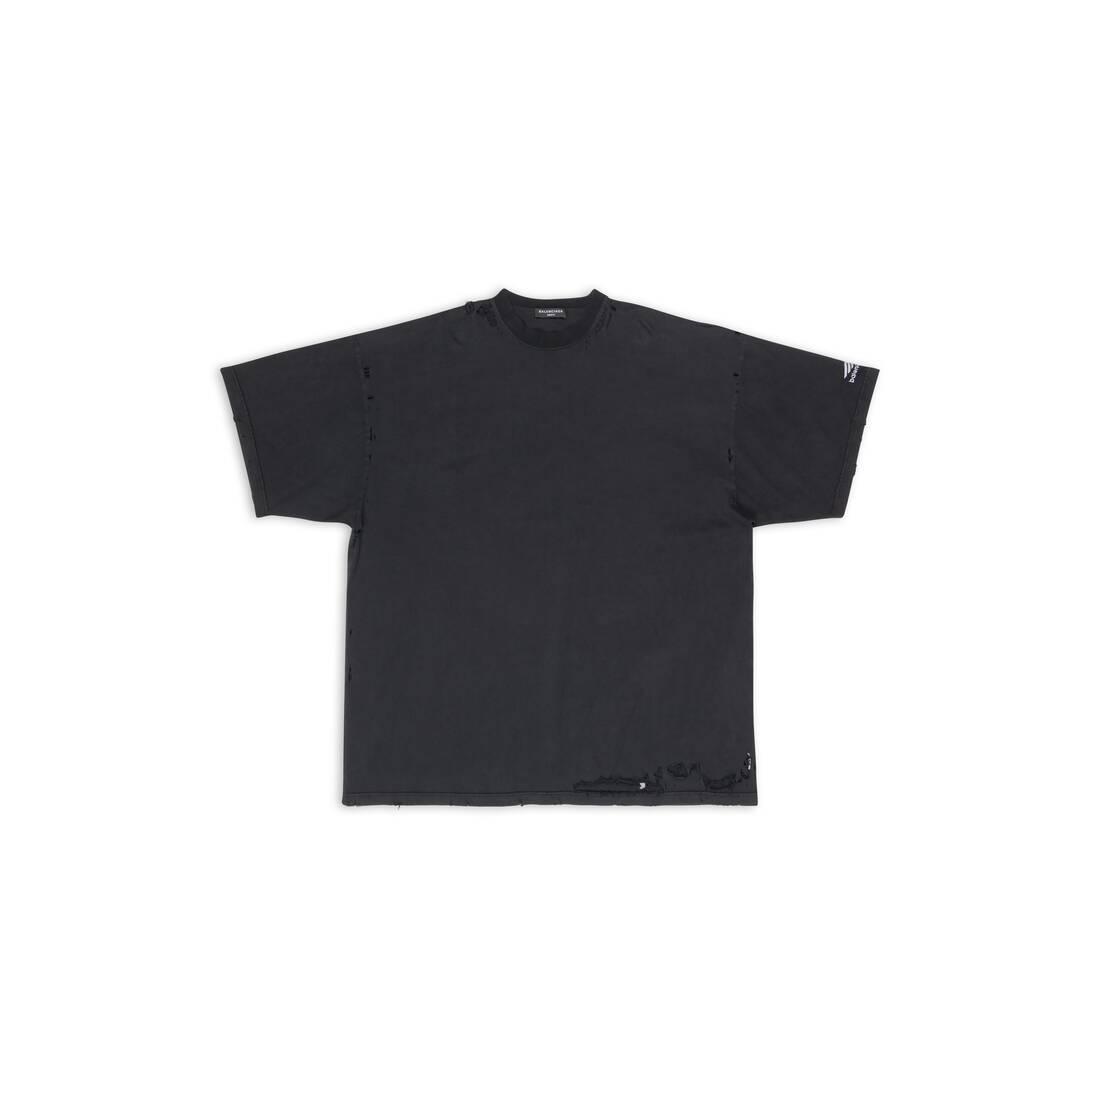 Balenciaga Skater T-Shirt Oversized - Black - Unisex - 2 - Cotton